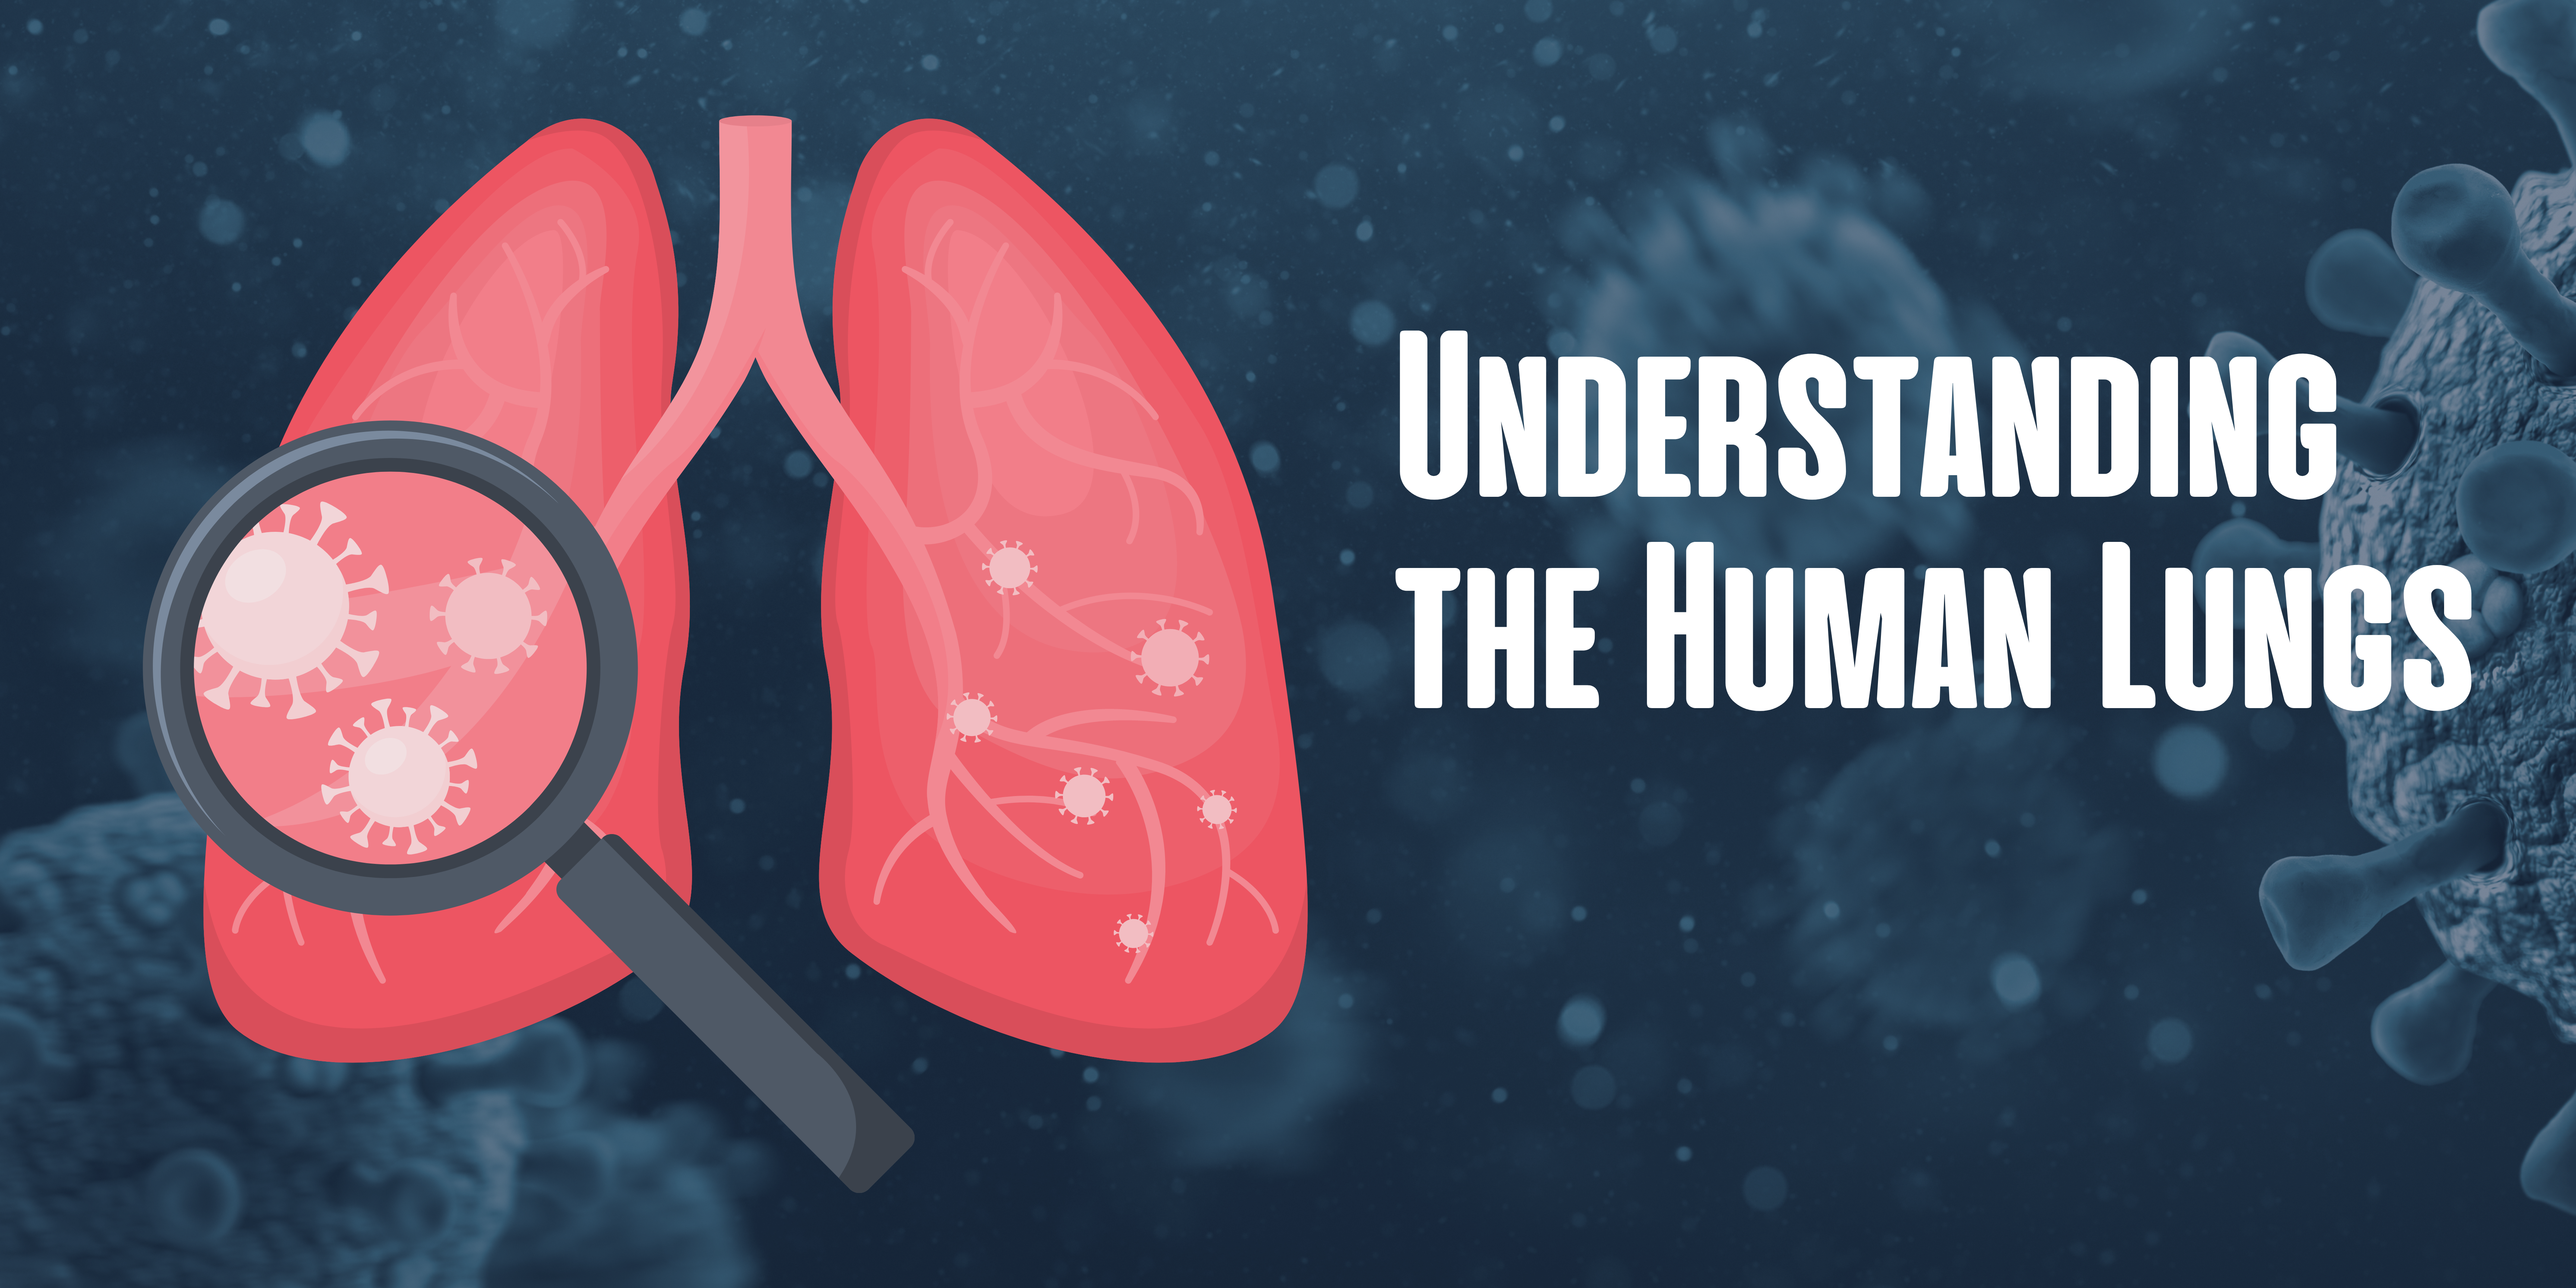 understanding the Human Lungs